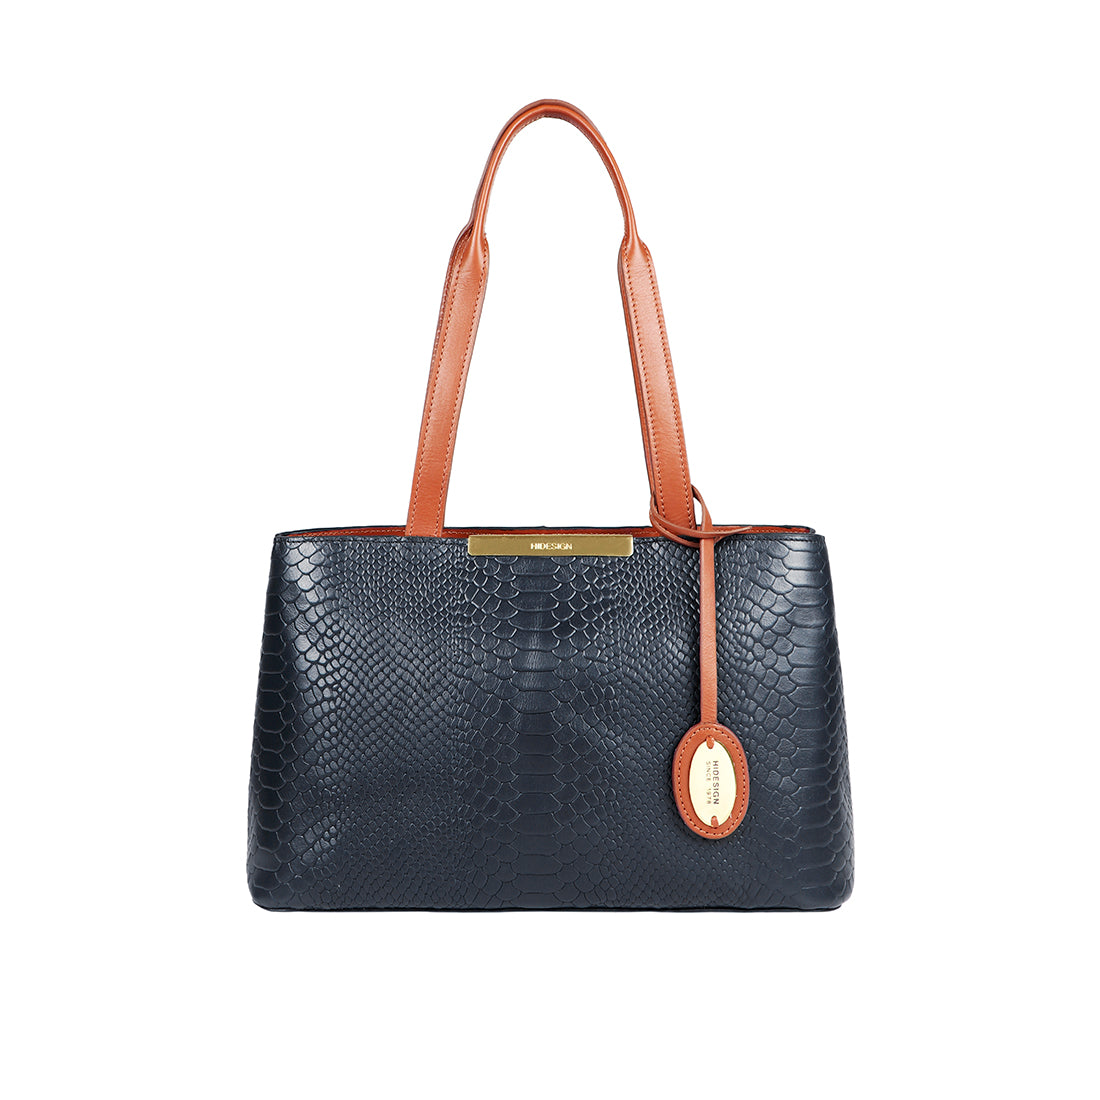 Hidesign Handbags - Buy Hidesign Handbags Online at Best Prices In India |  Flipkart.com